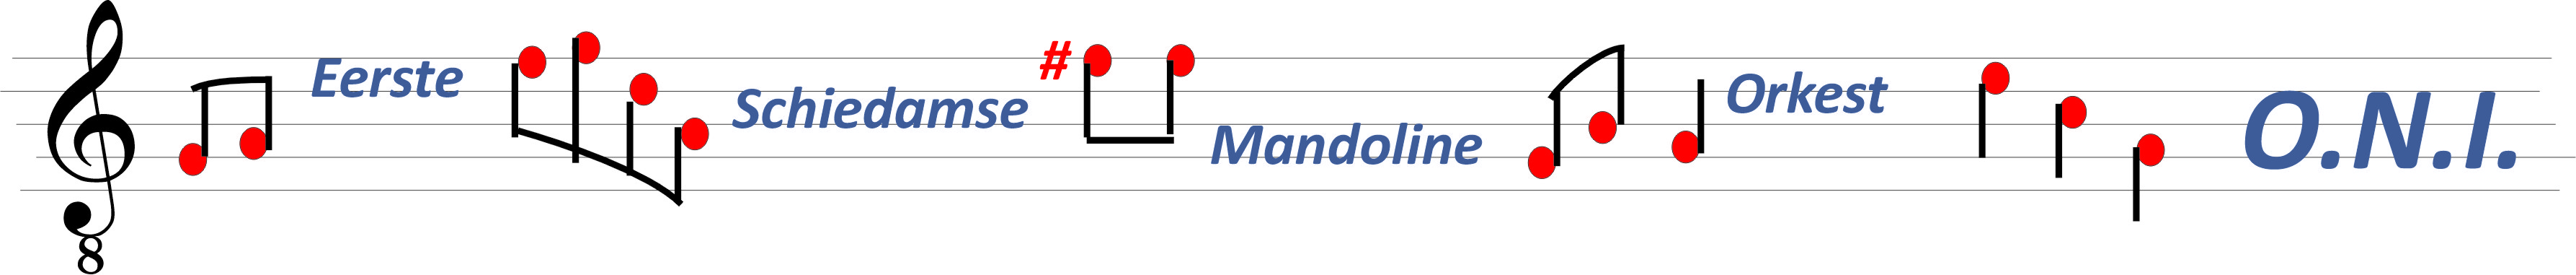                  Eerste Schiedamse Mandoline Orkest O.N.I.